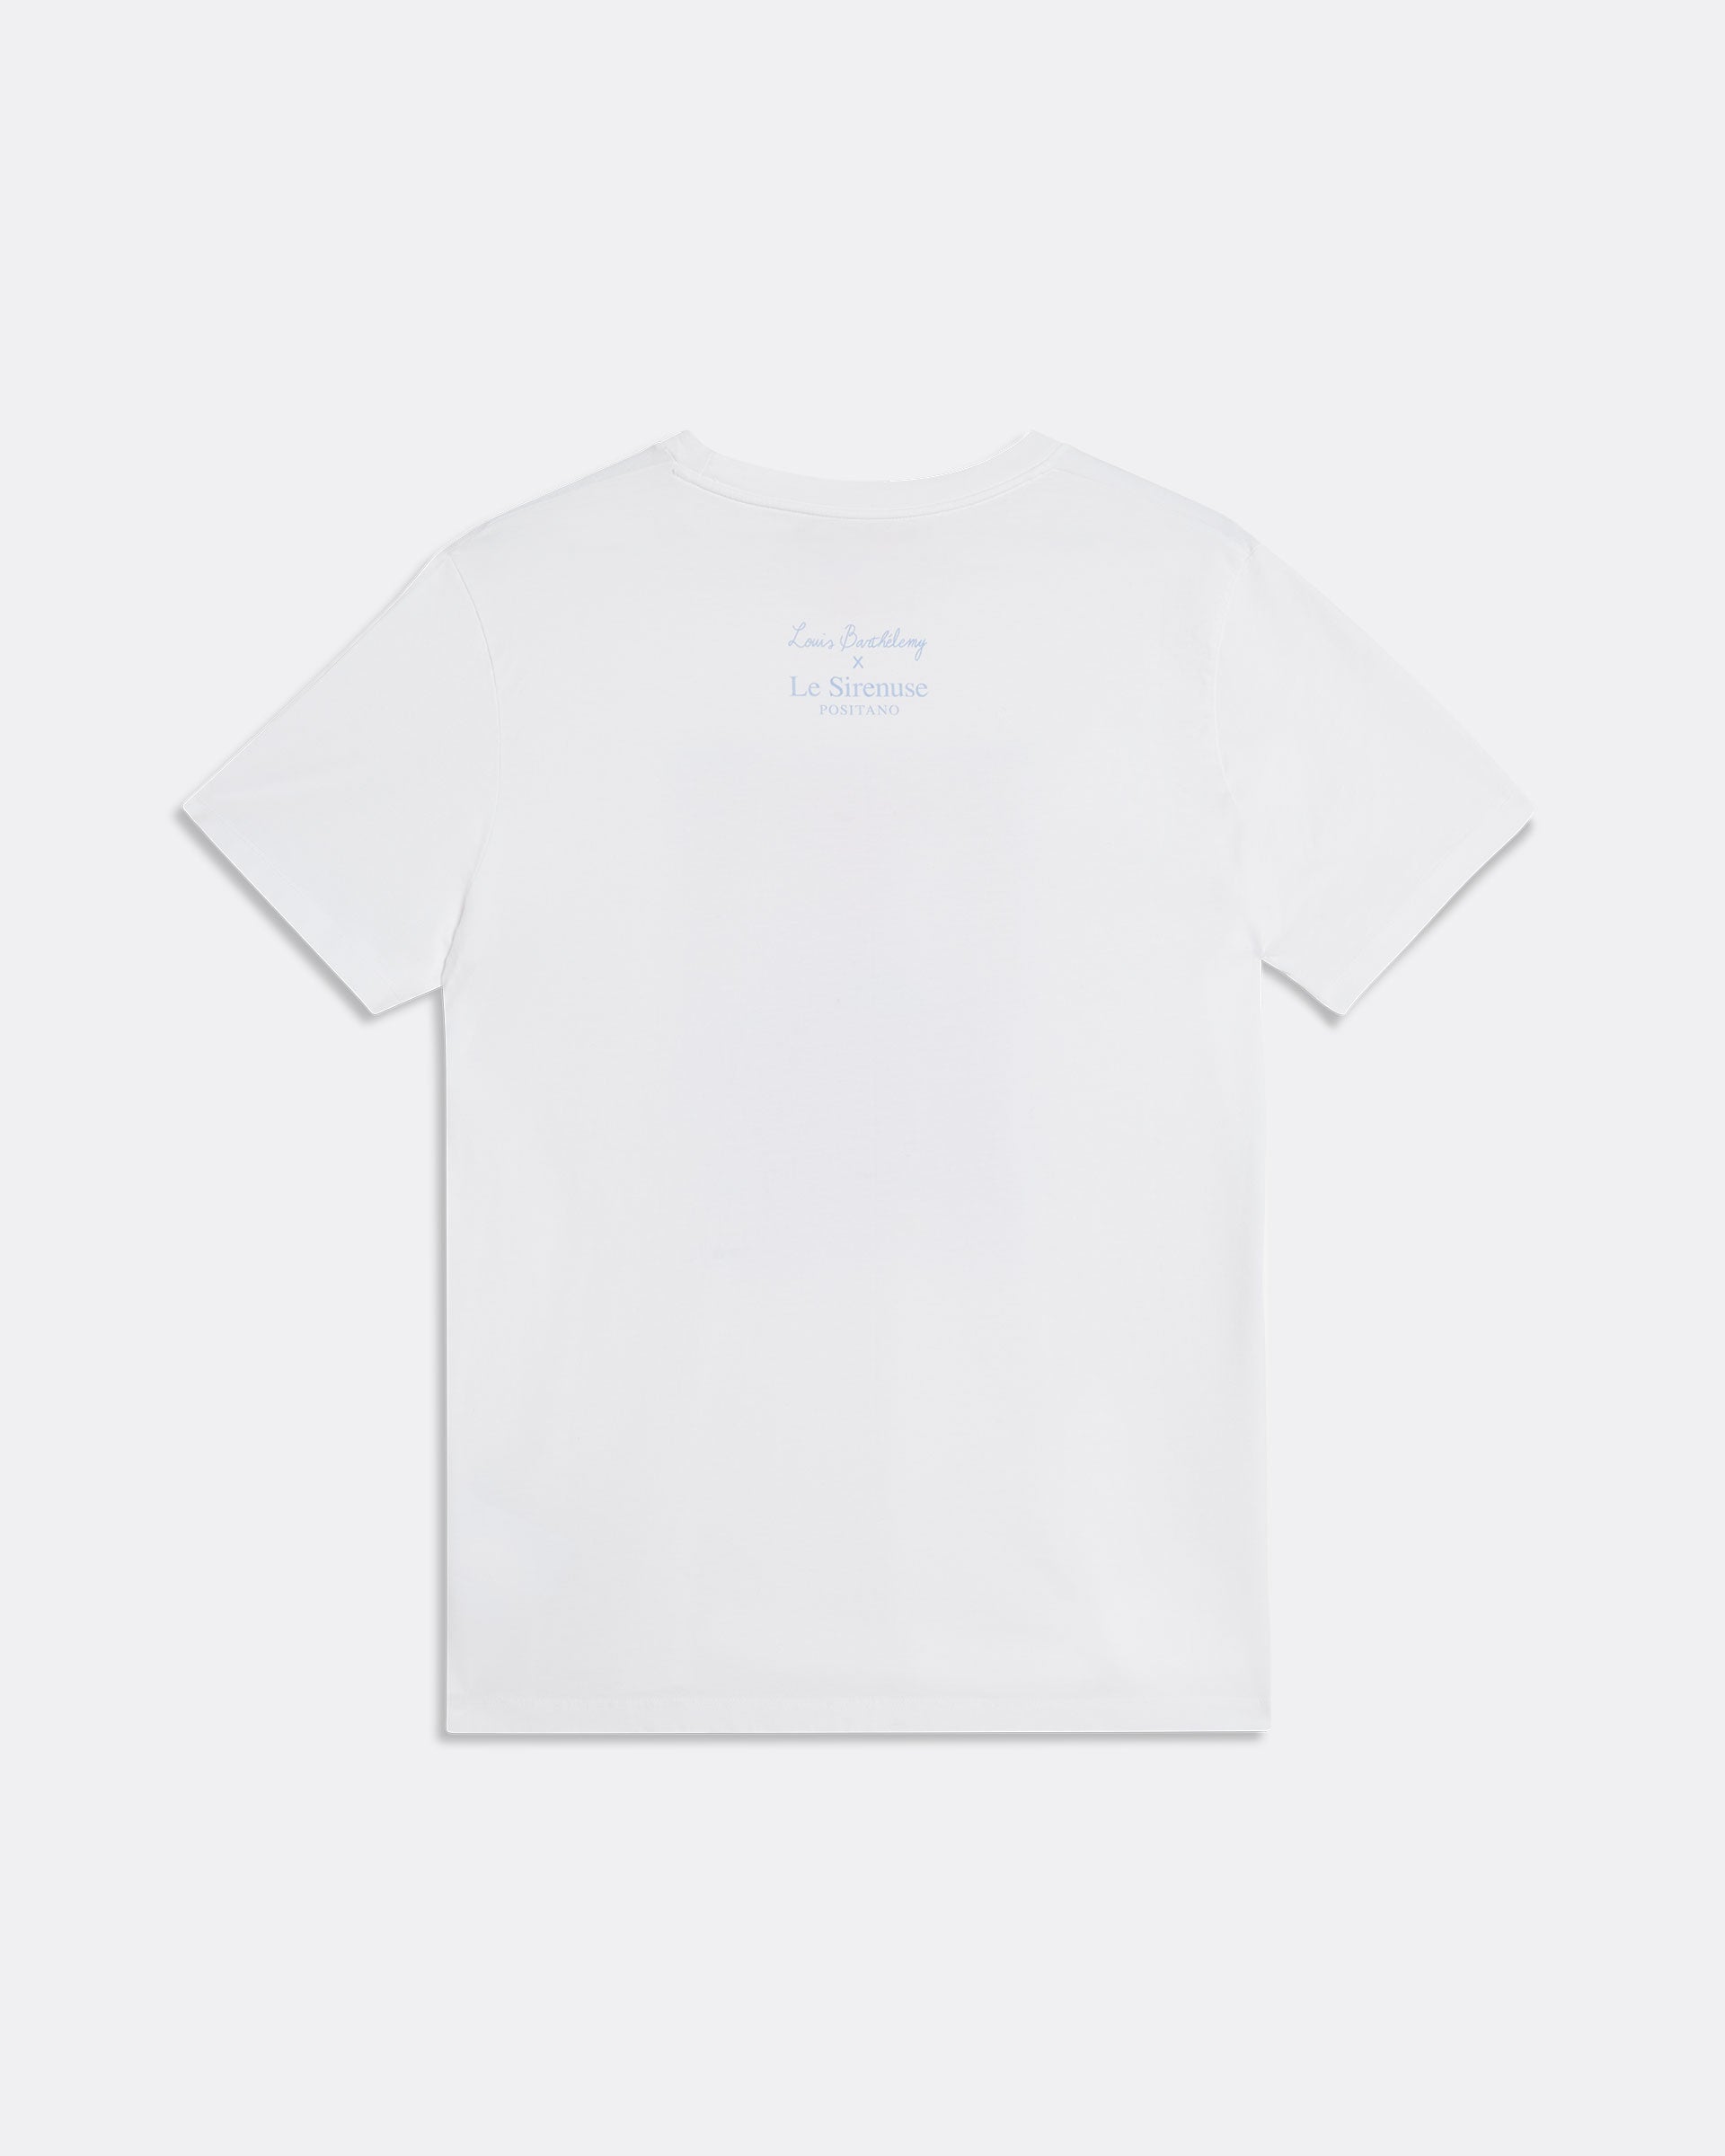 The Louis Barthelemy T-Shirt White